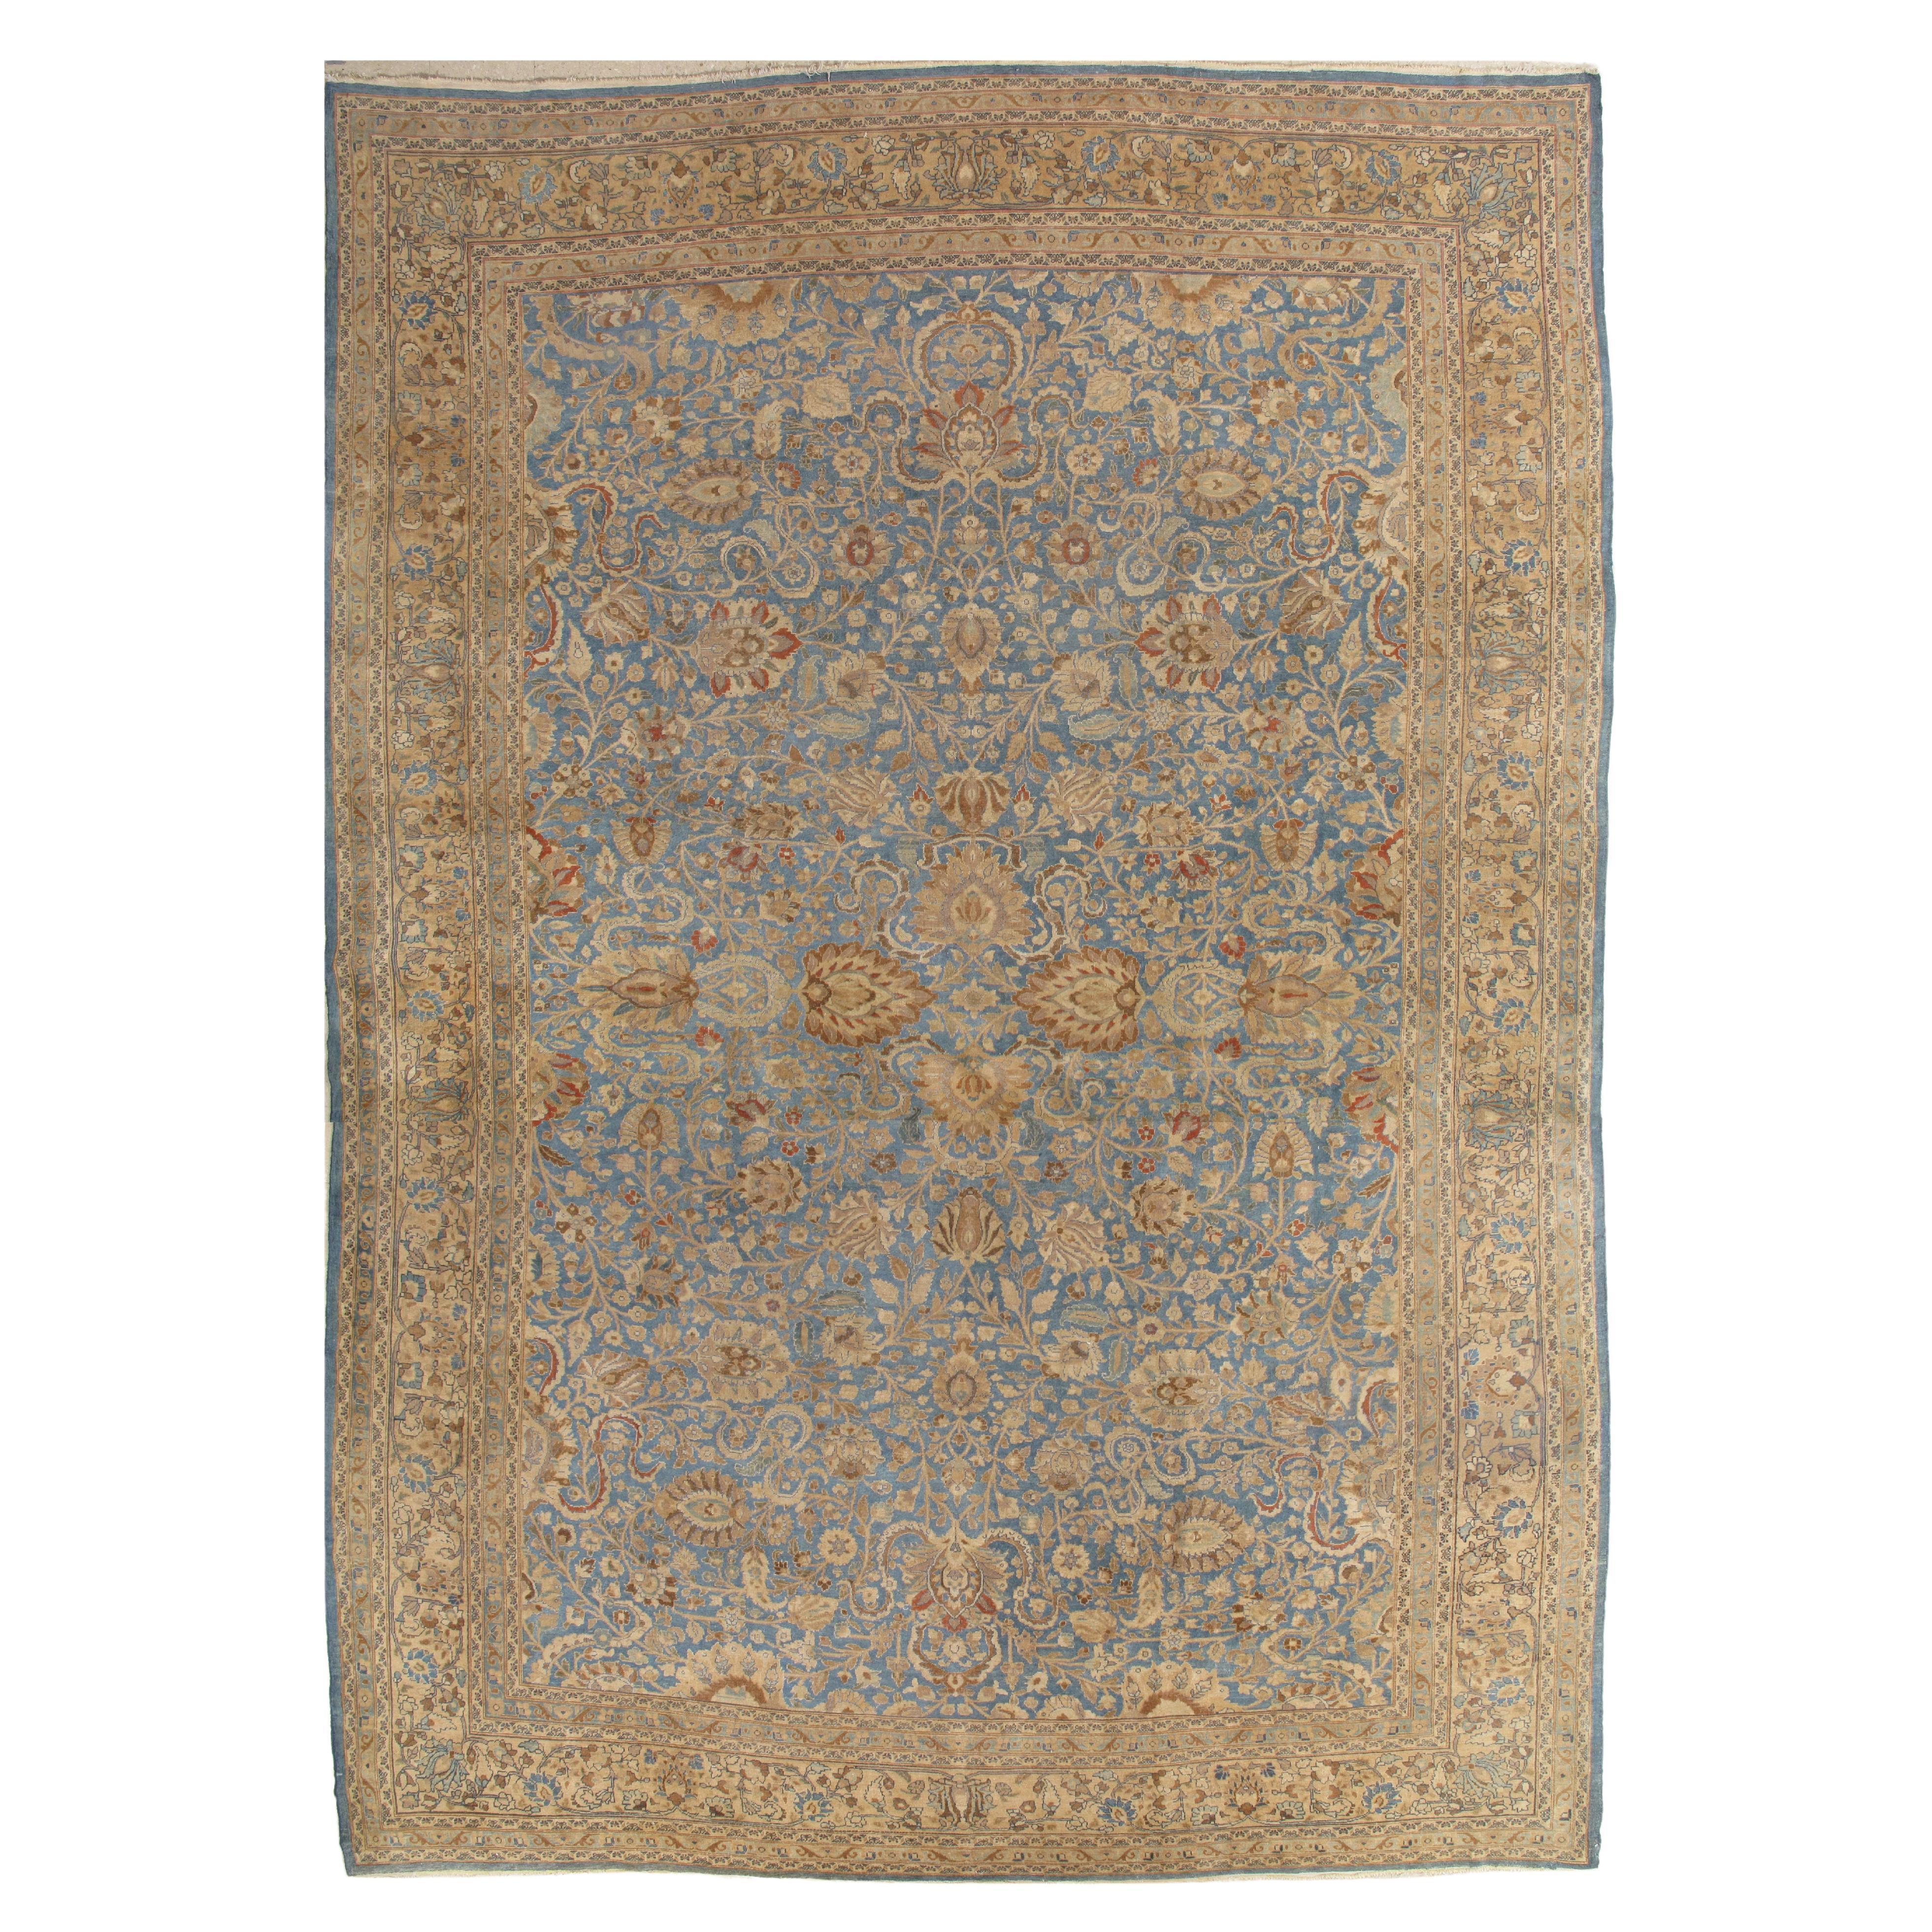 Antique Persian Mashad Carpet, Handmade Oriental Rug, Soft, Taupe, Lt Blue Beige For Sale